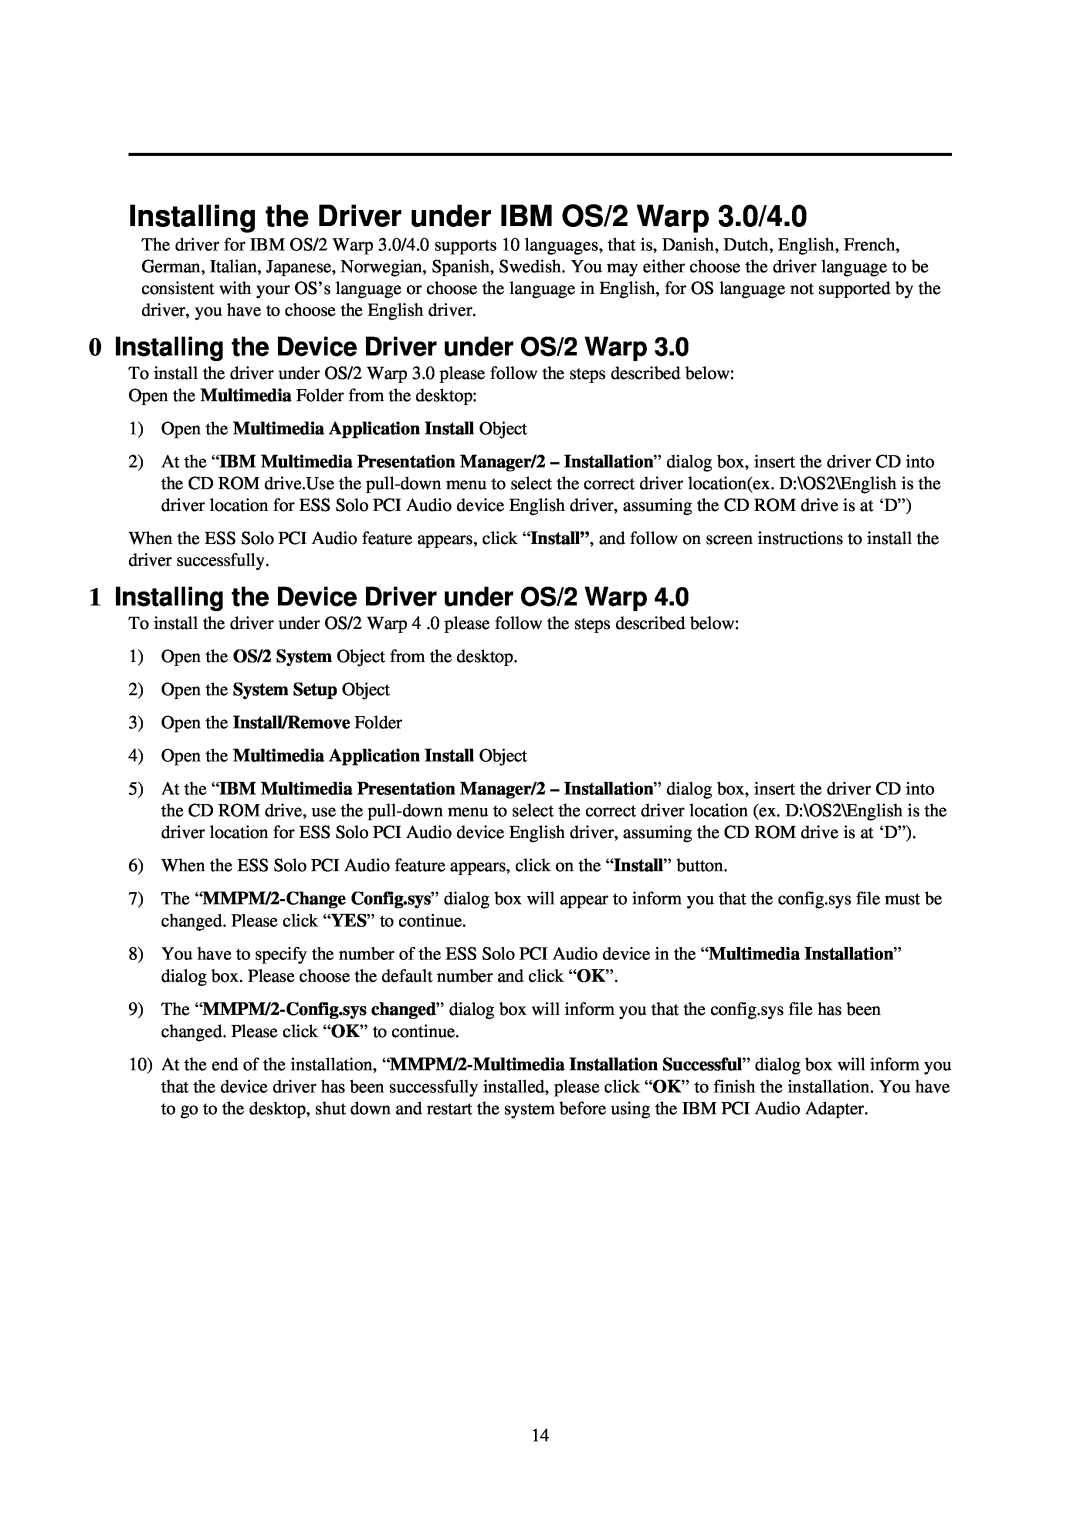 IBM L70 manual Installing the Driver under IBM OS/2 Warp 3.0/4.0, Installing the Device Driver under OS/2 Warp 